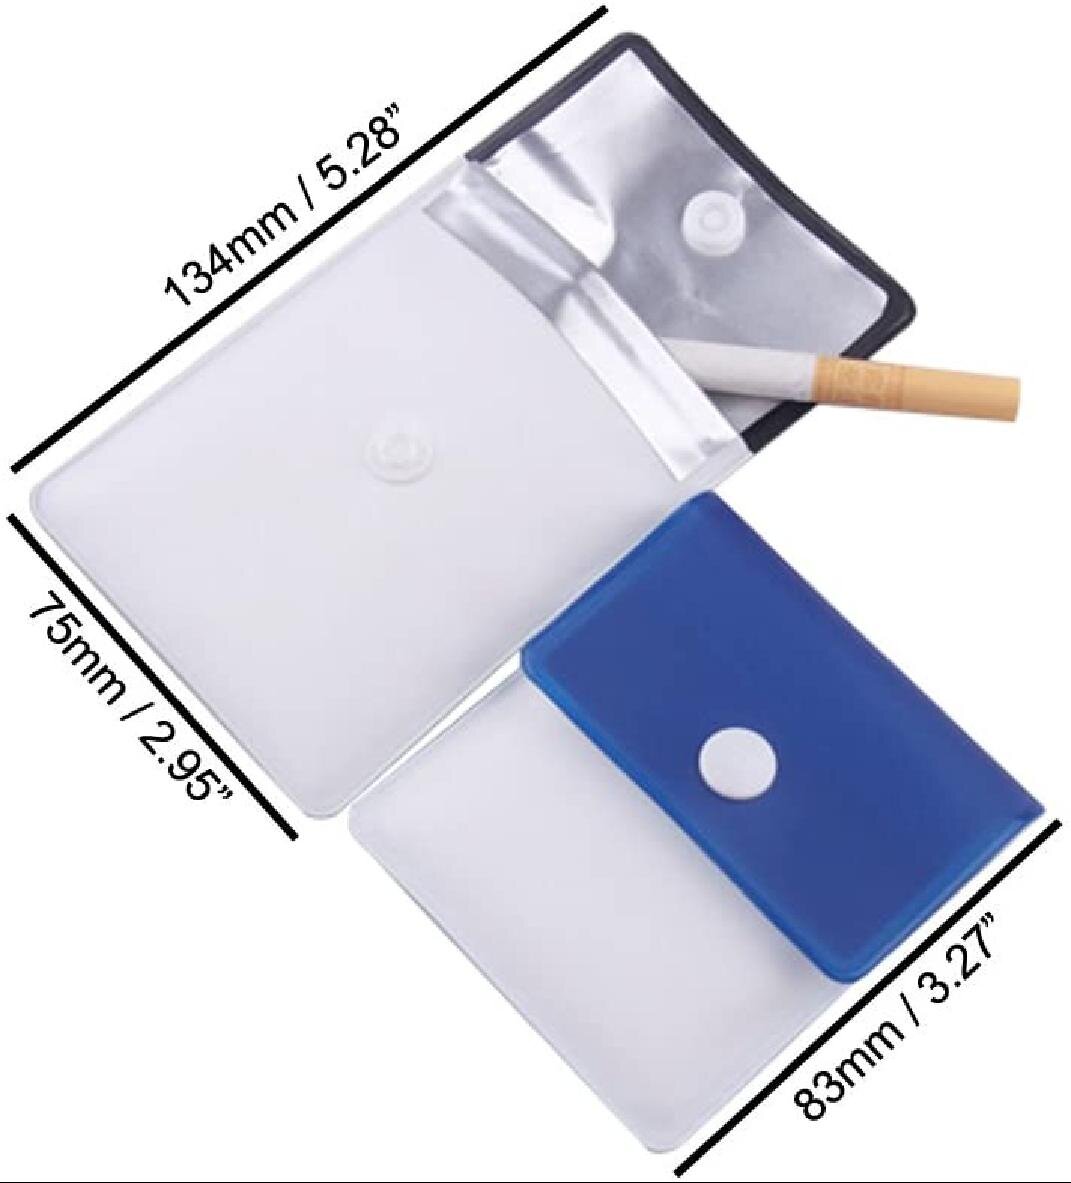 My Ashtray Blue and White Pocket Ashtray Portable Reusable Fireproof Lining 